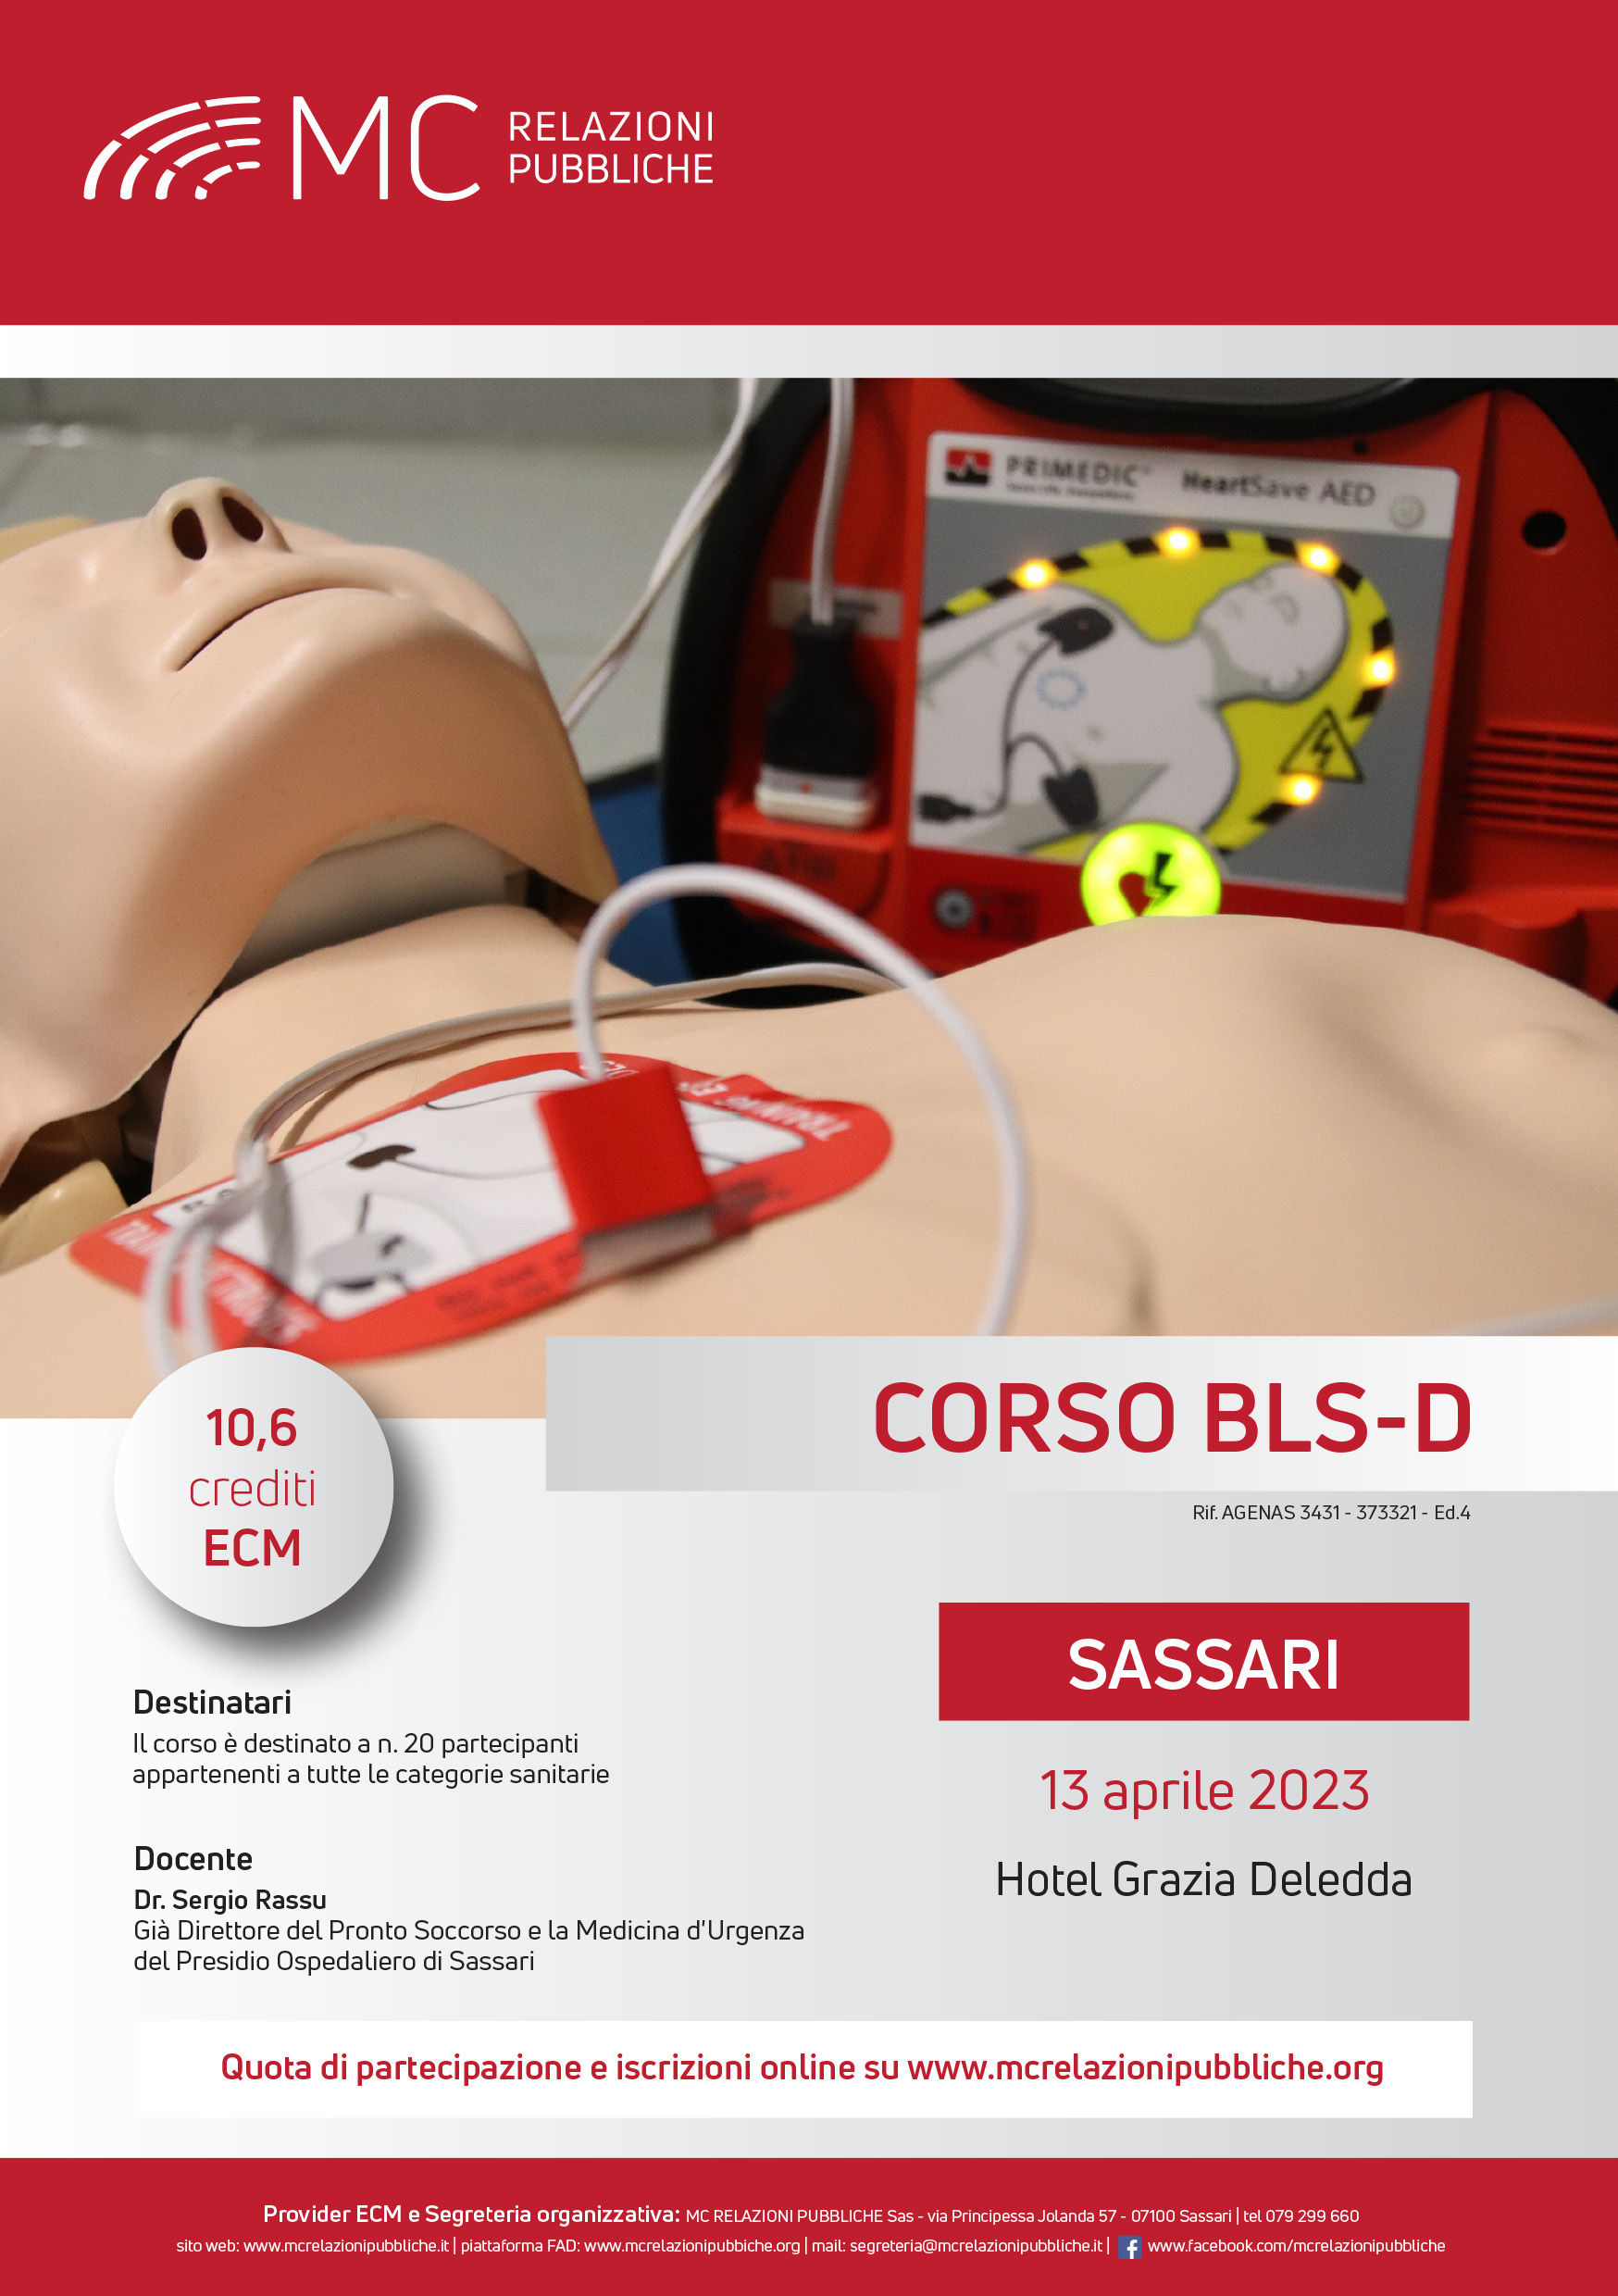 Corso BLS-D. Basic life support-defibrillation ed.4